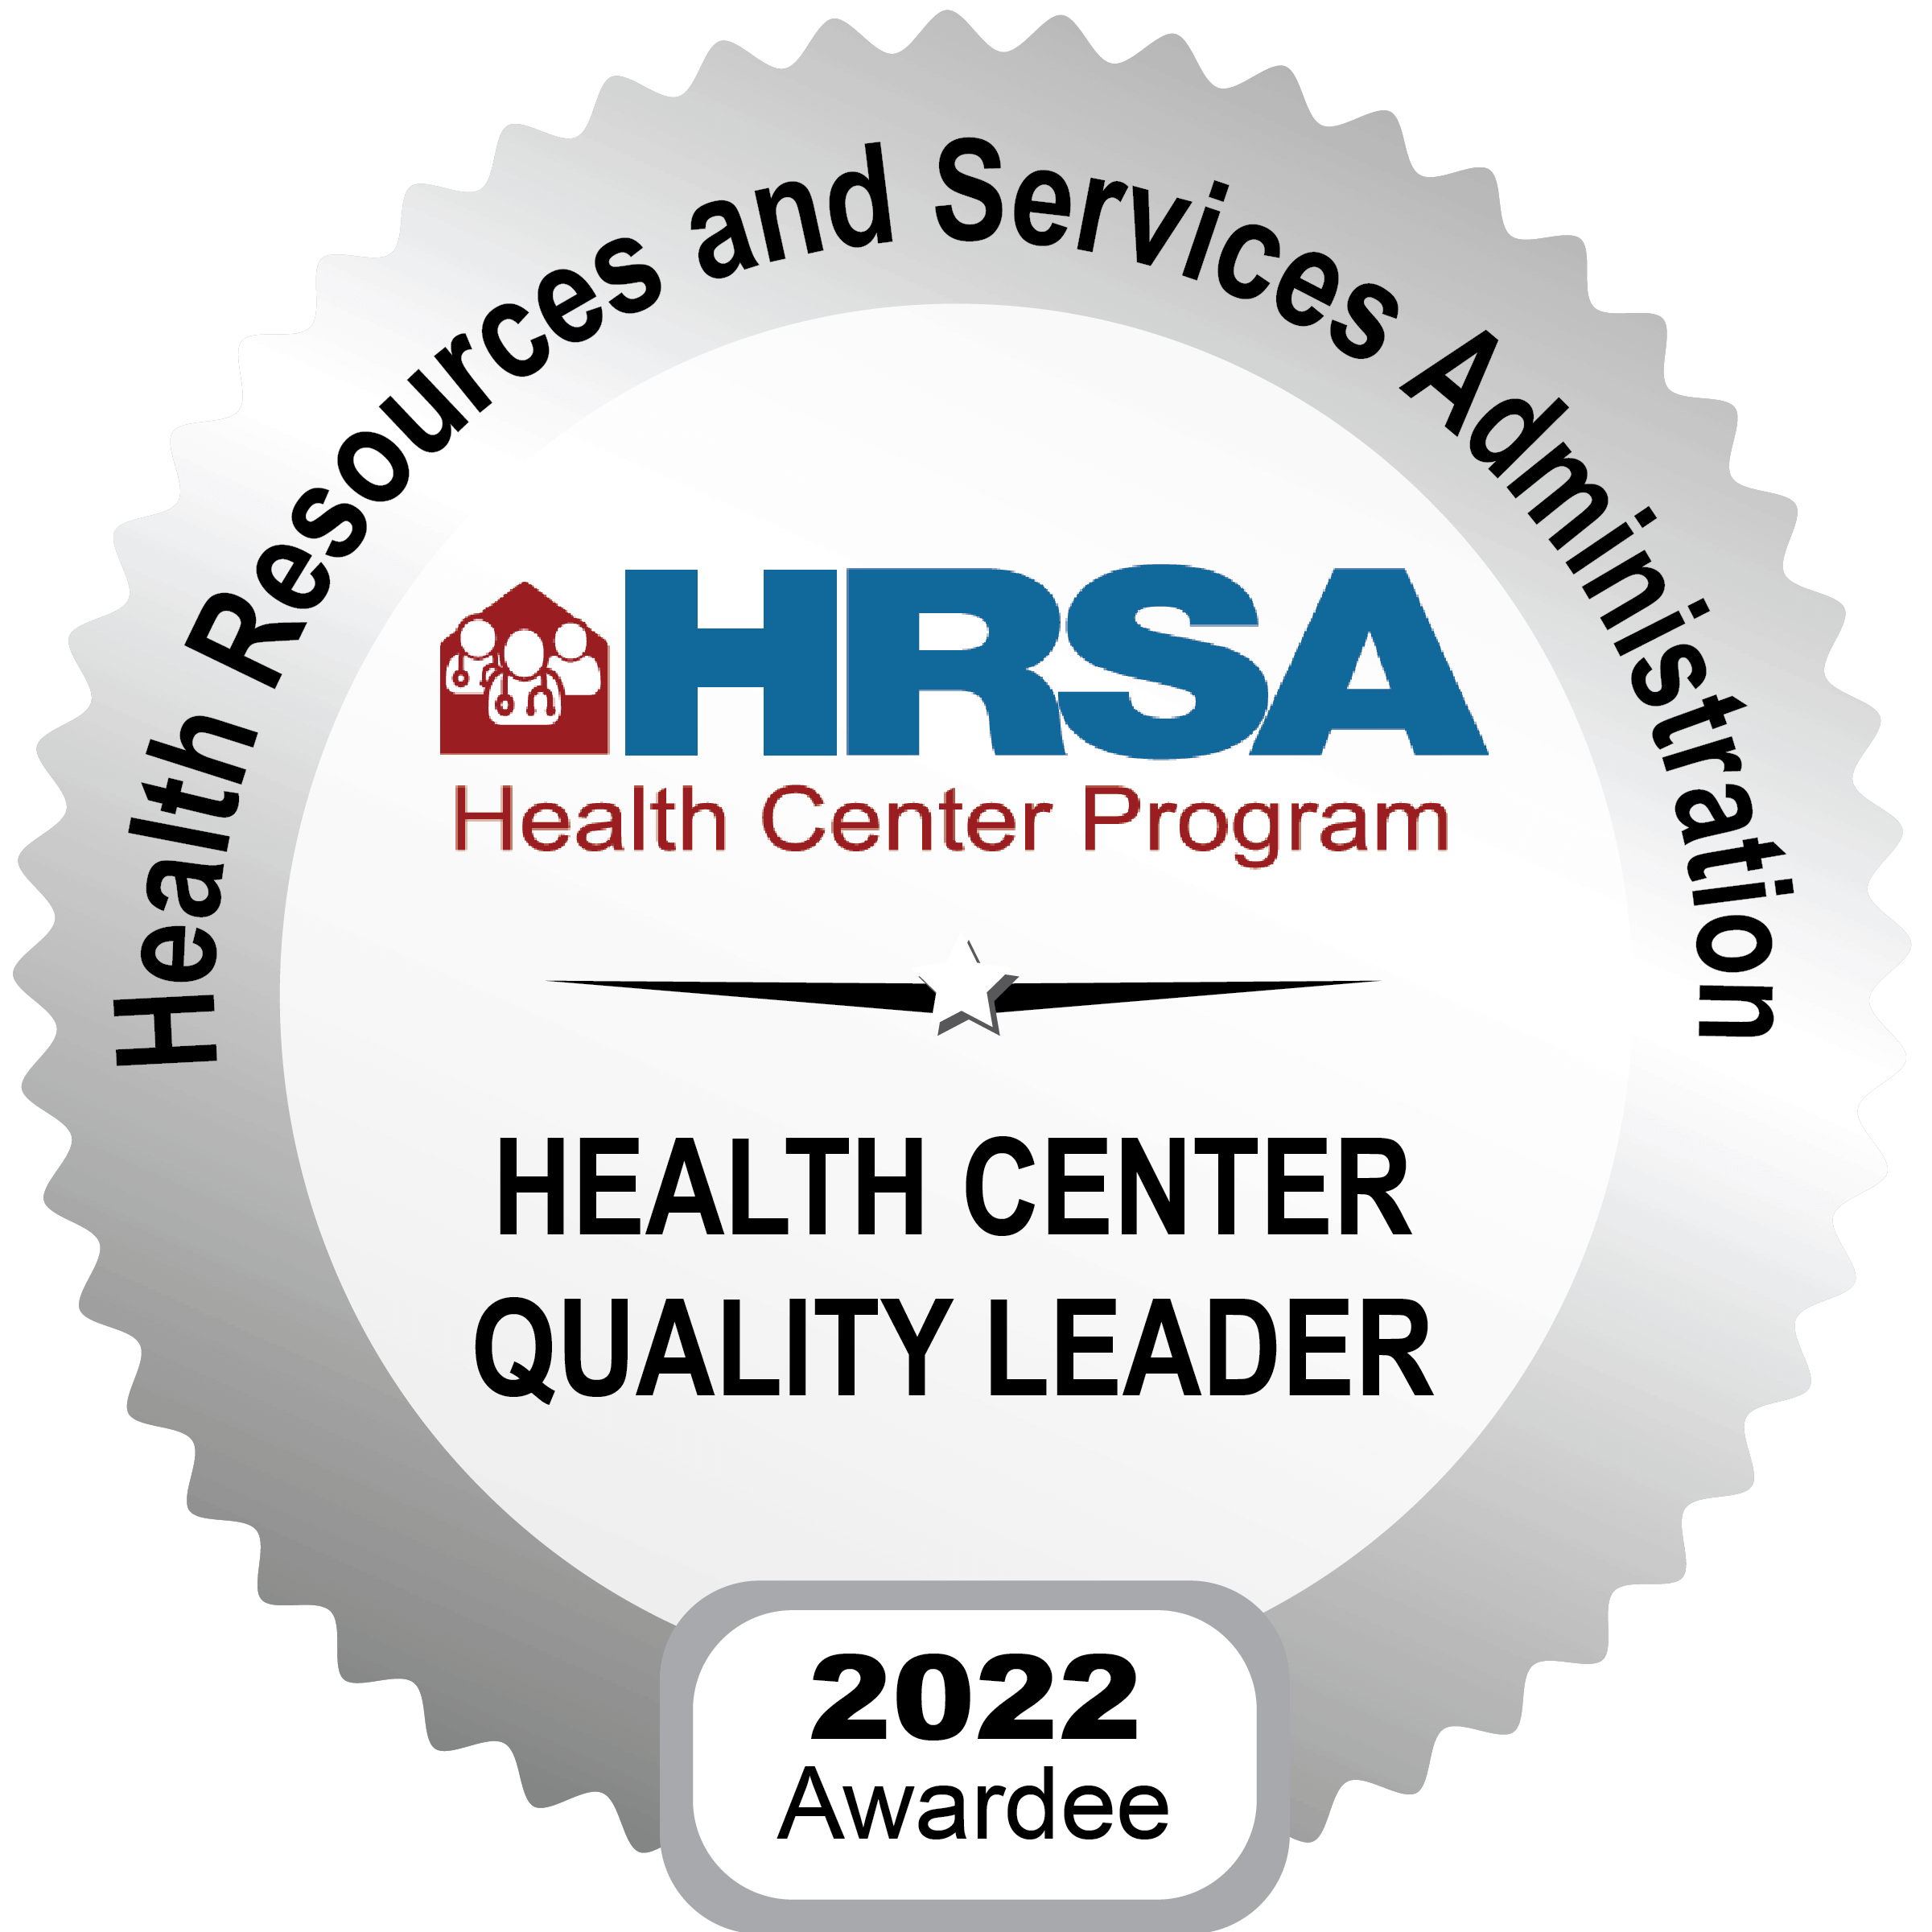 HRSA Health Center Quality Leader 2022 Awardee